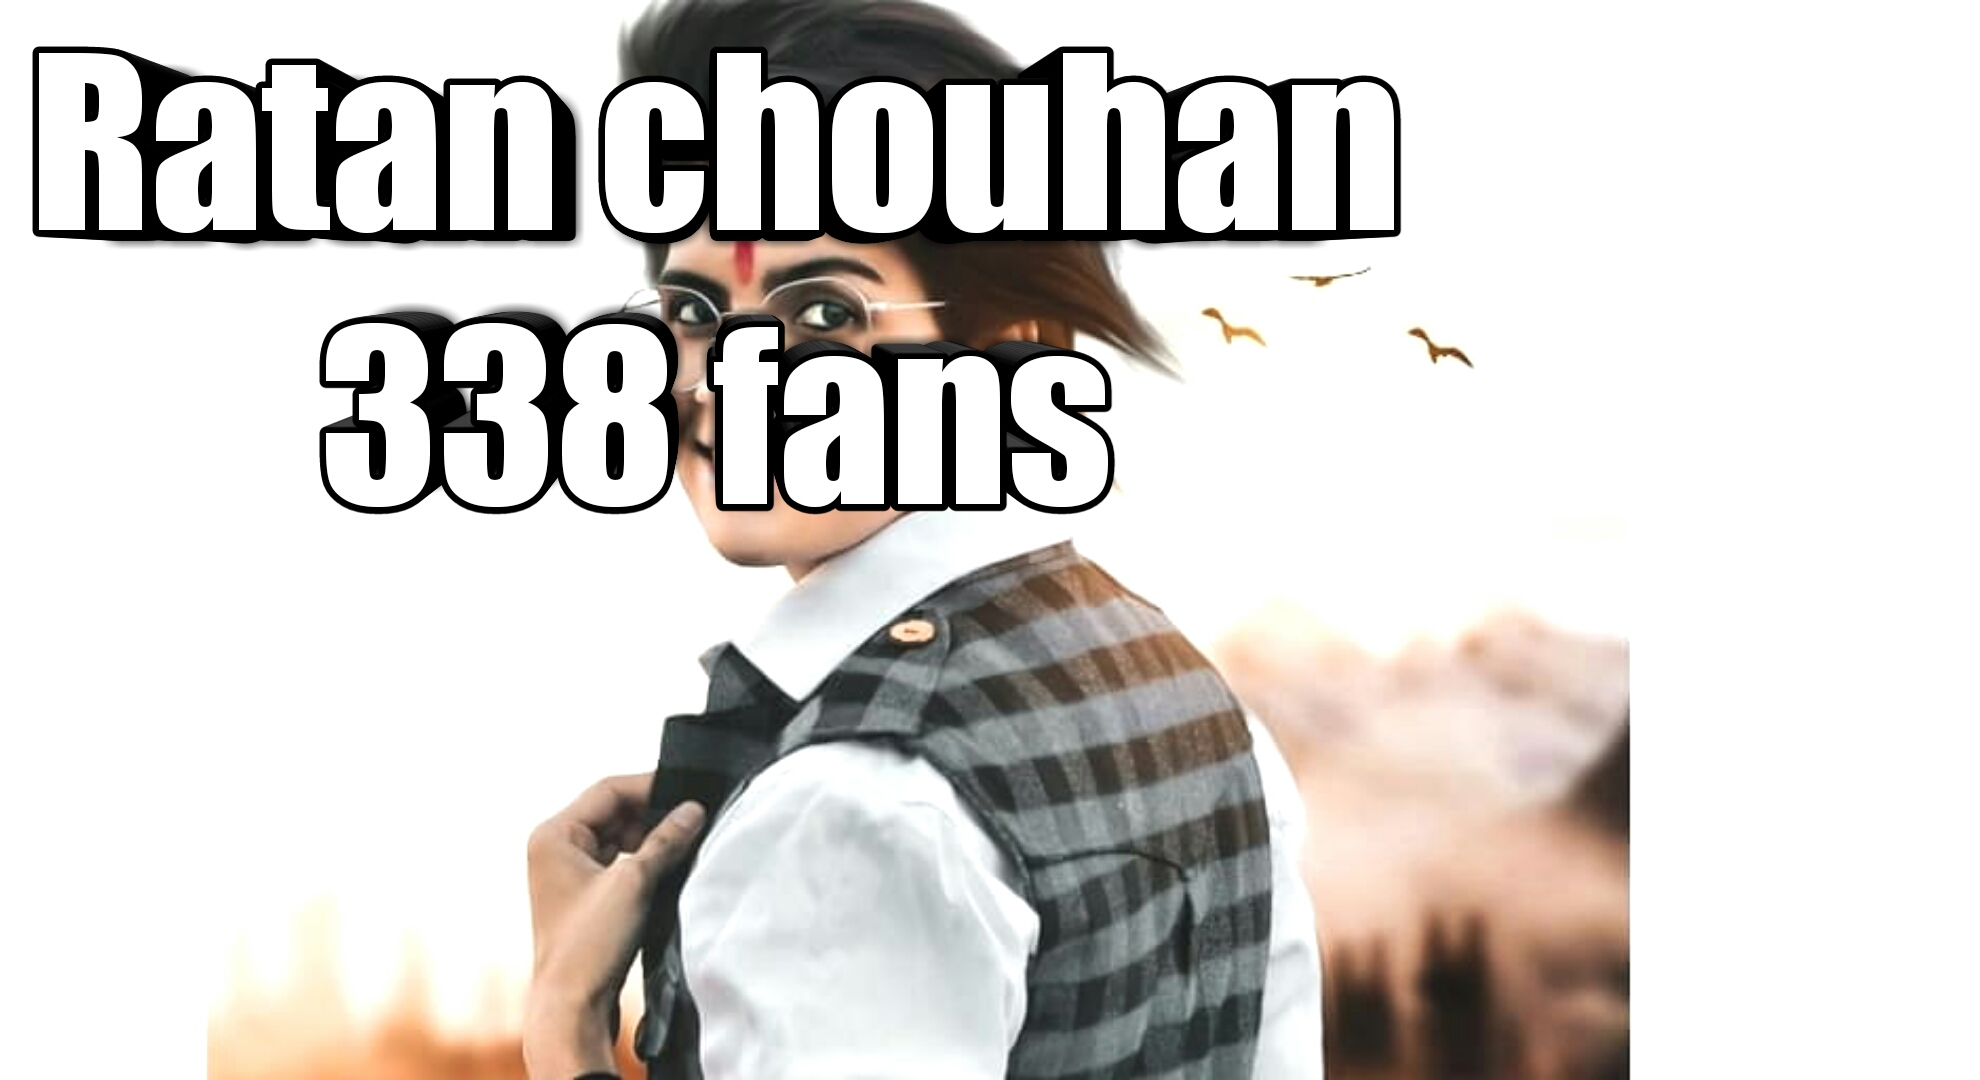 Ratan chouhan 338 fans